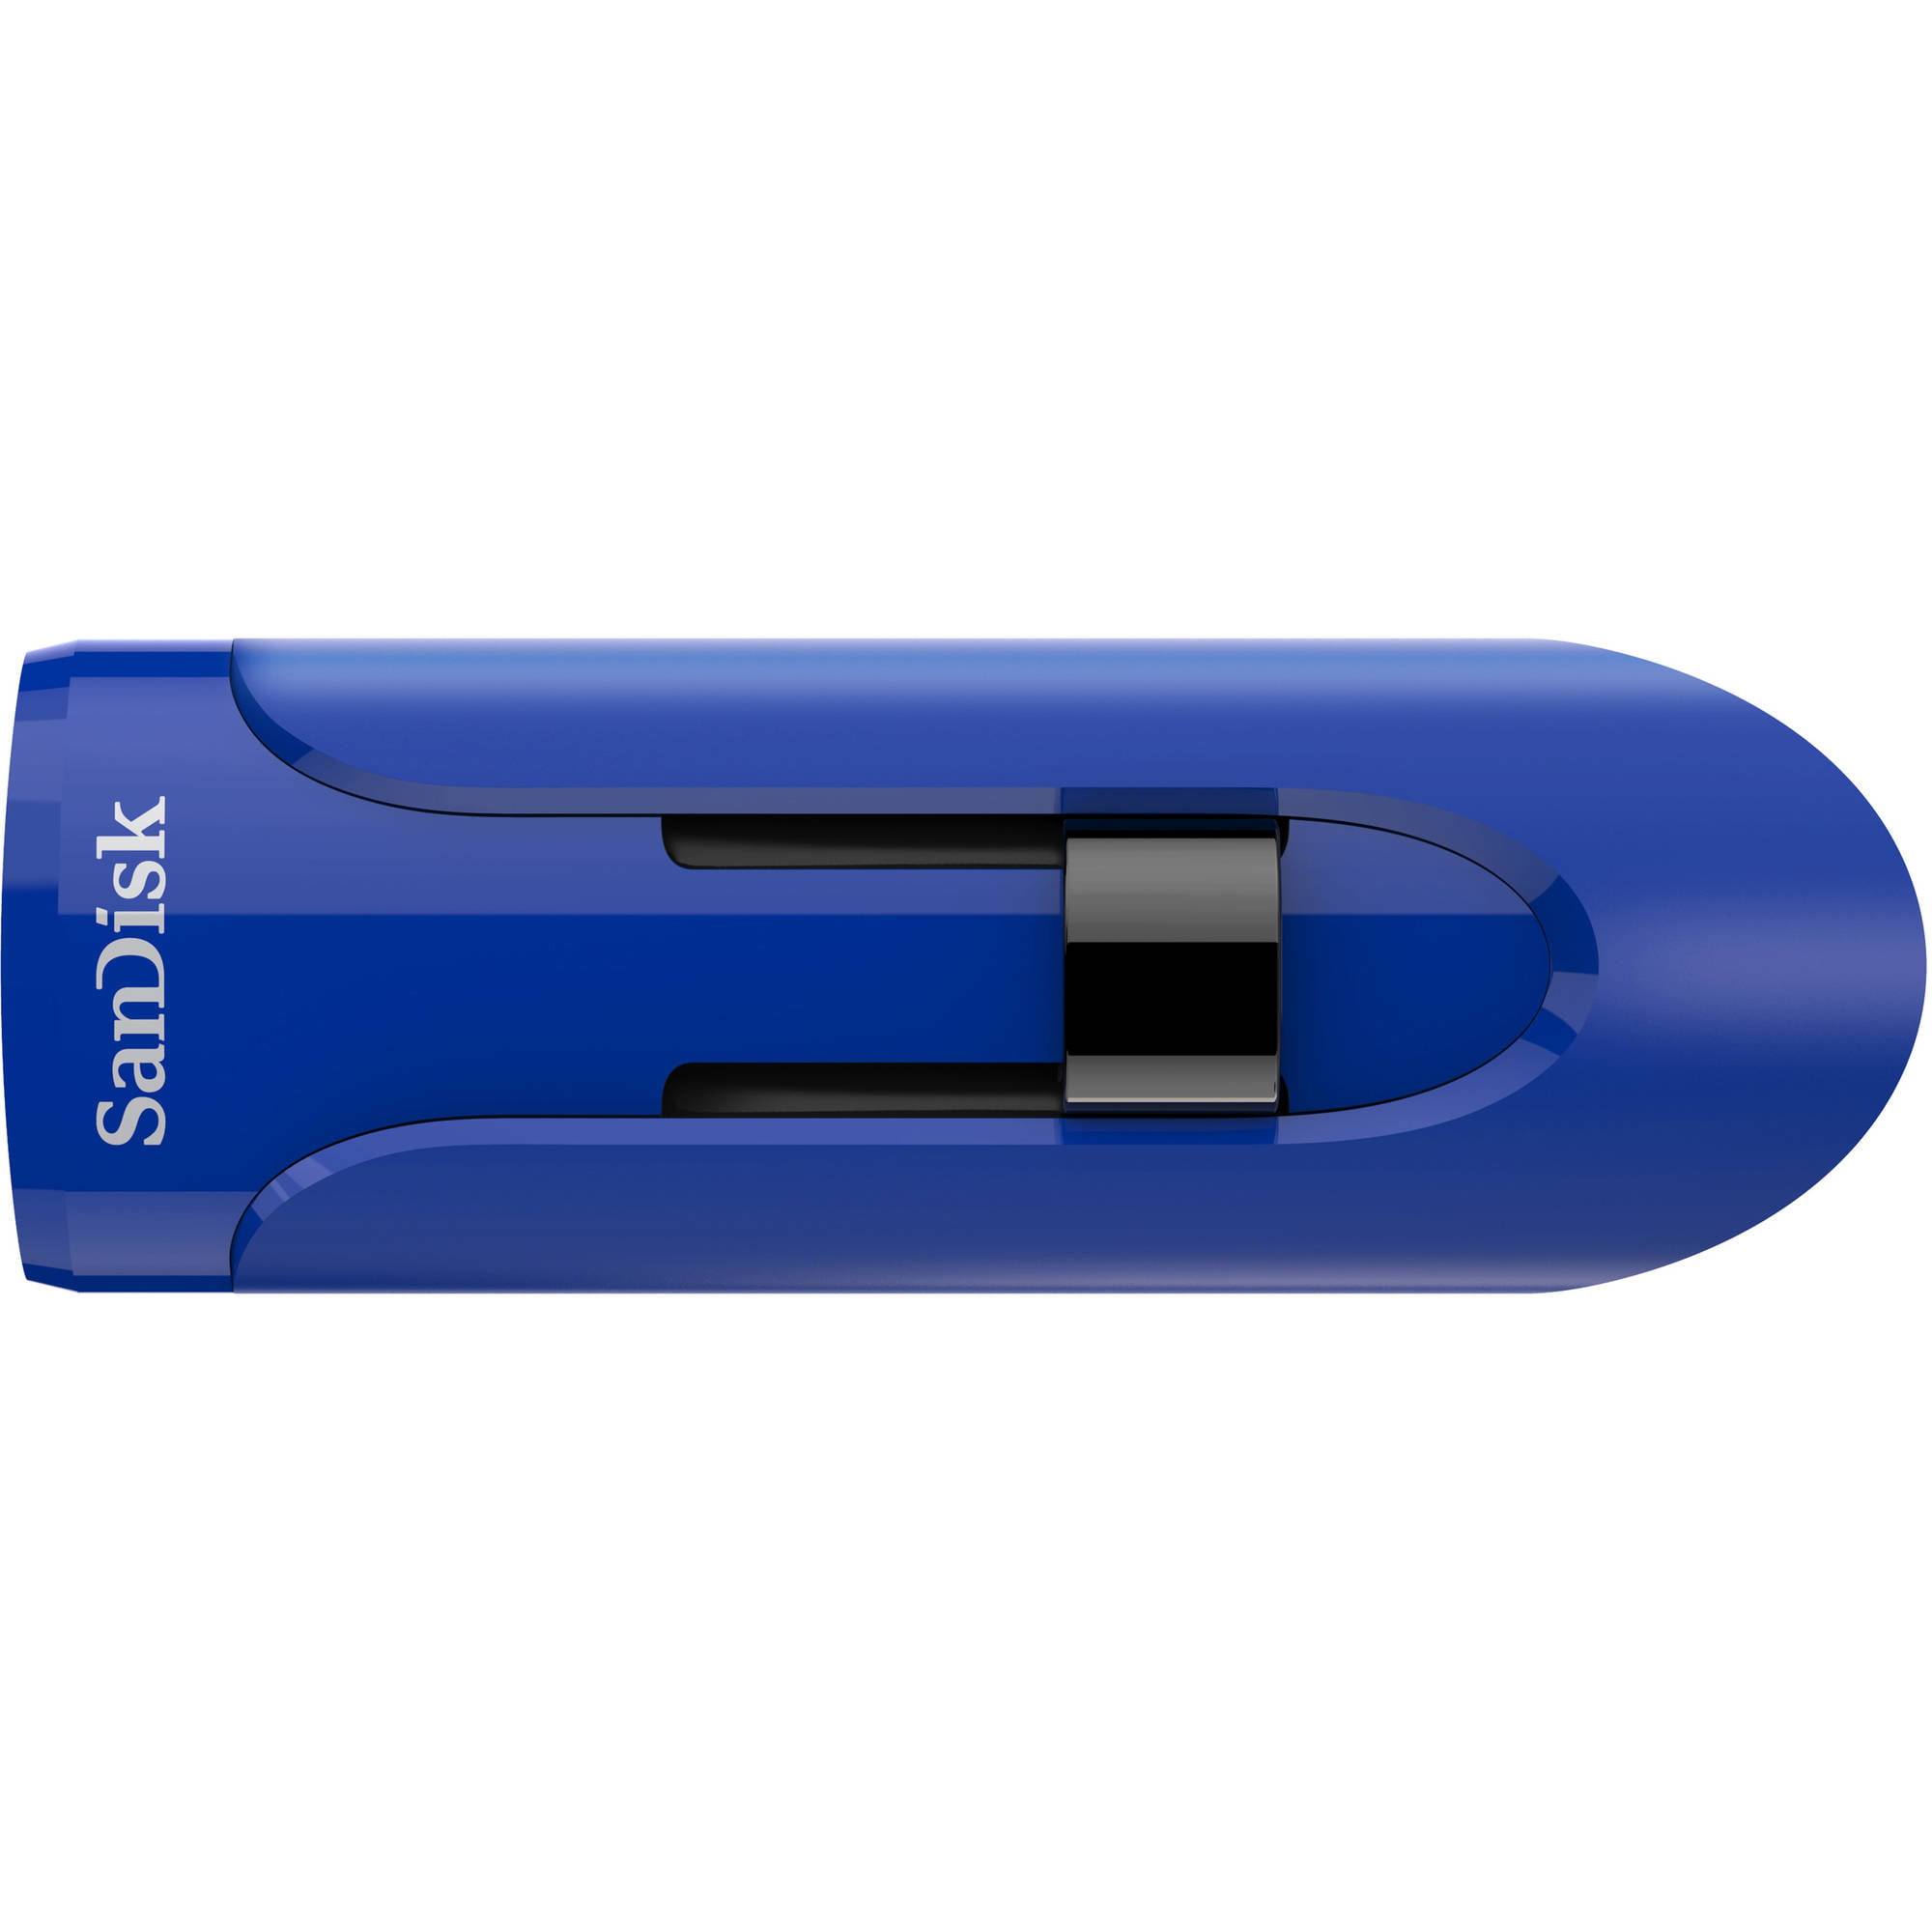 SanDisk 32GB Cruzer Glide USB 2.0 Flash Drive - SDCZ60-032G-AW46 